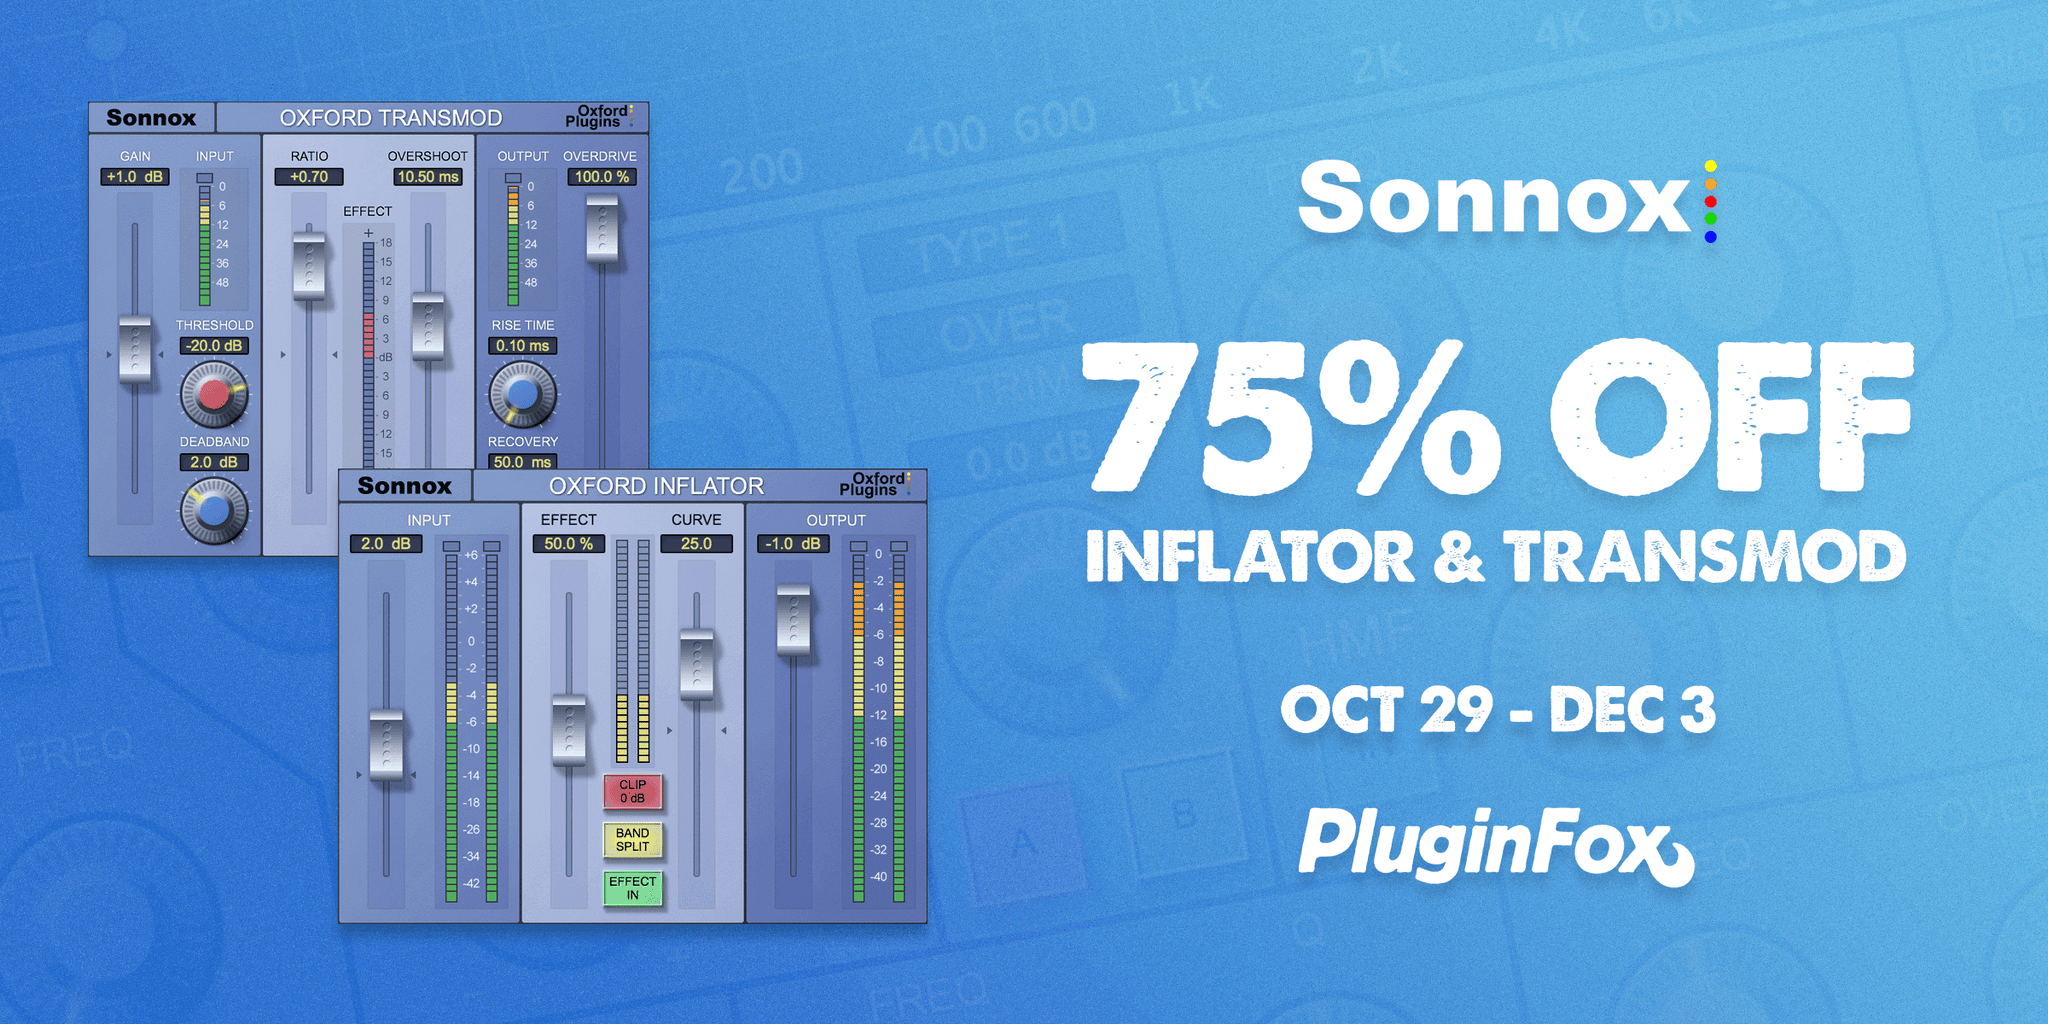 Sonnox November Sale - 75% off - Oct 29 - Dec 3